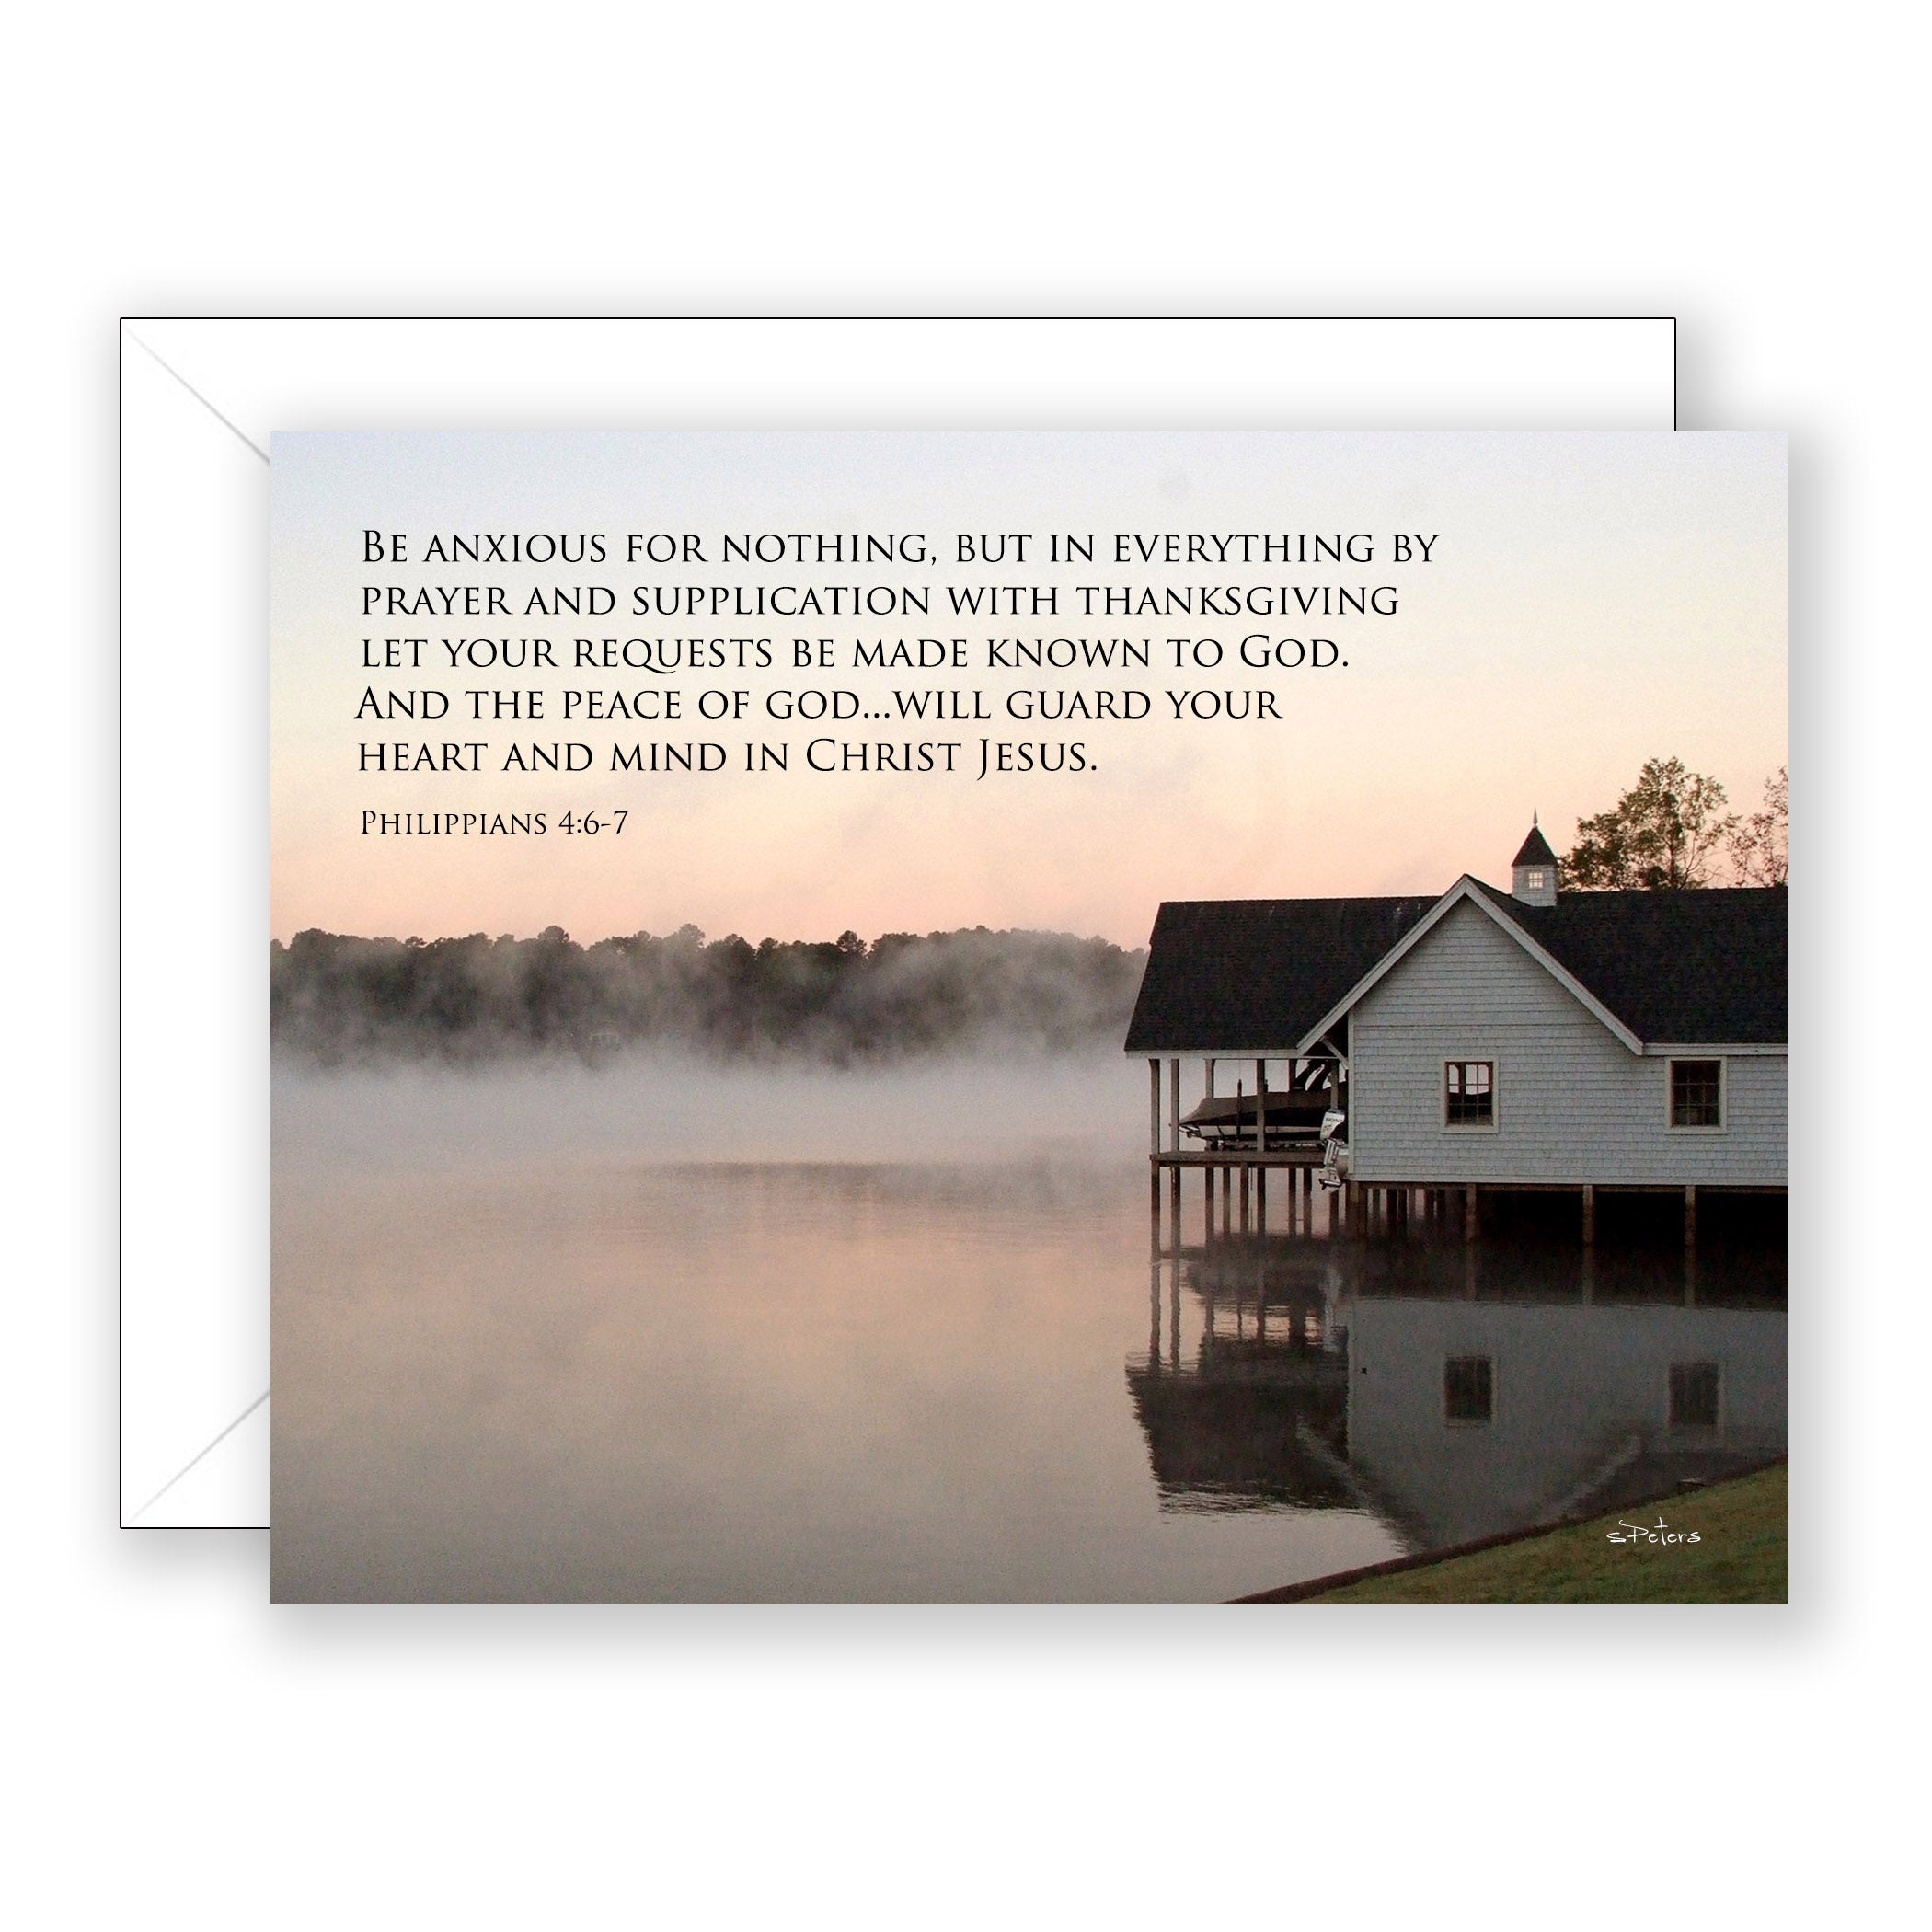 Morning Mist (Philippians 4:6-7) - Encouragement Card (Blank)